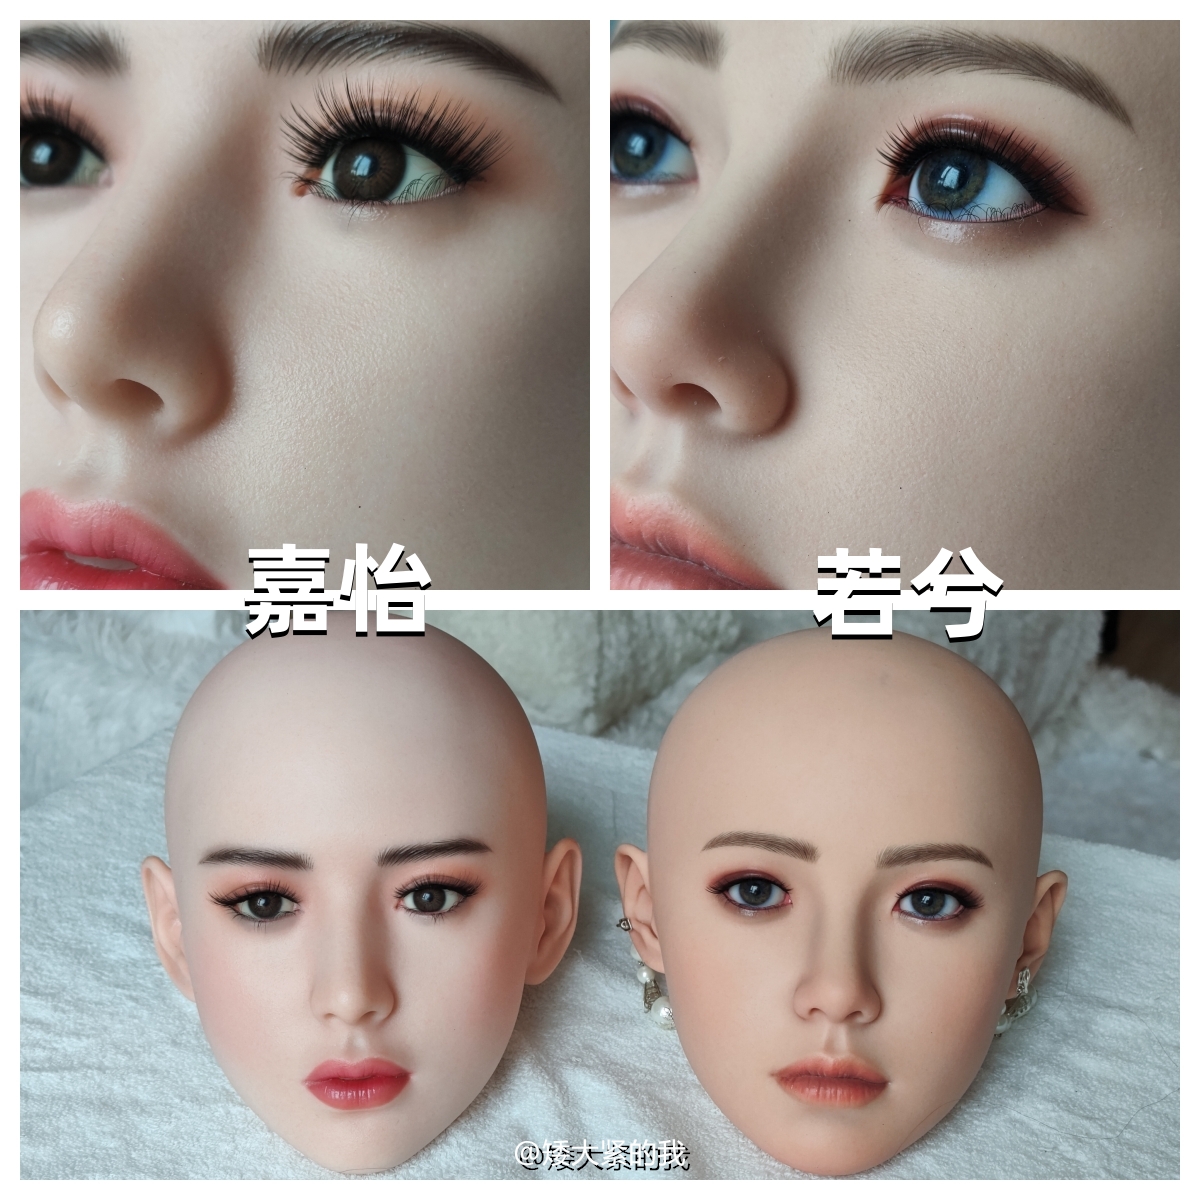 Gynoid Doll RZR|Realistic Silicone Sex Doll|Light Shooting|Head Sculpture|Head Carving|3D Eyeball|Lisa|Lori|13R